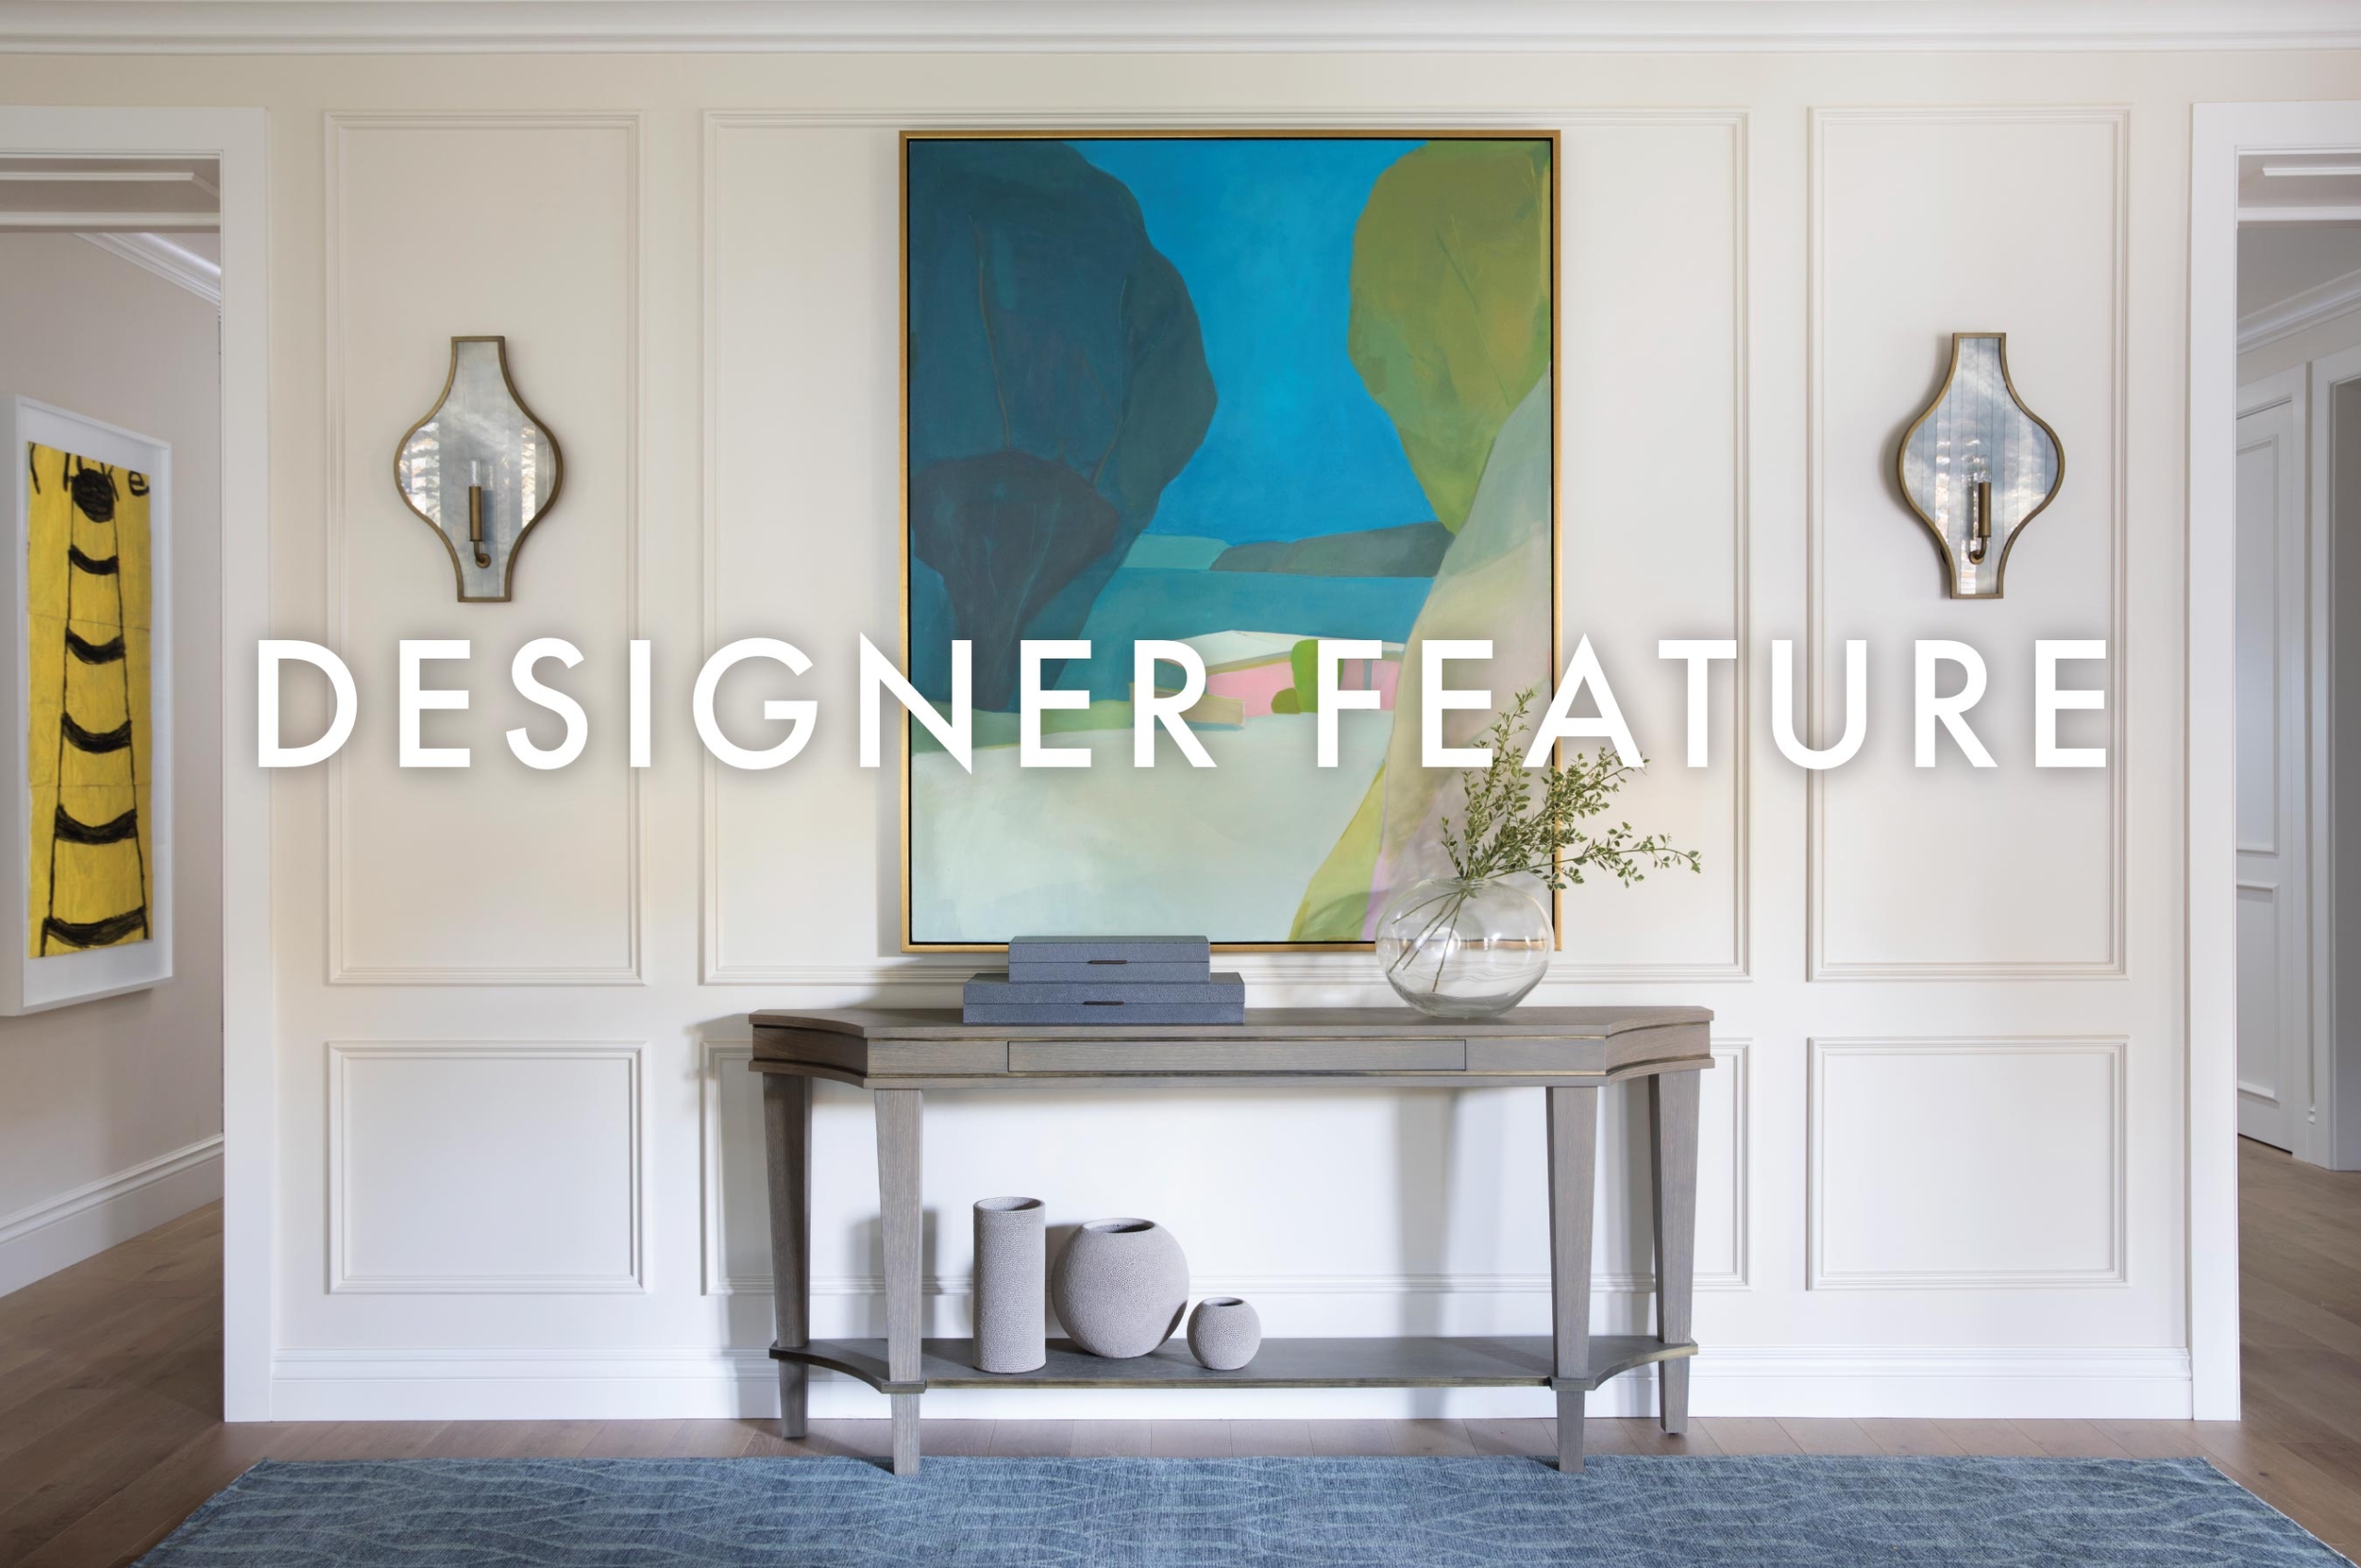 Designer-Feature-header